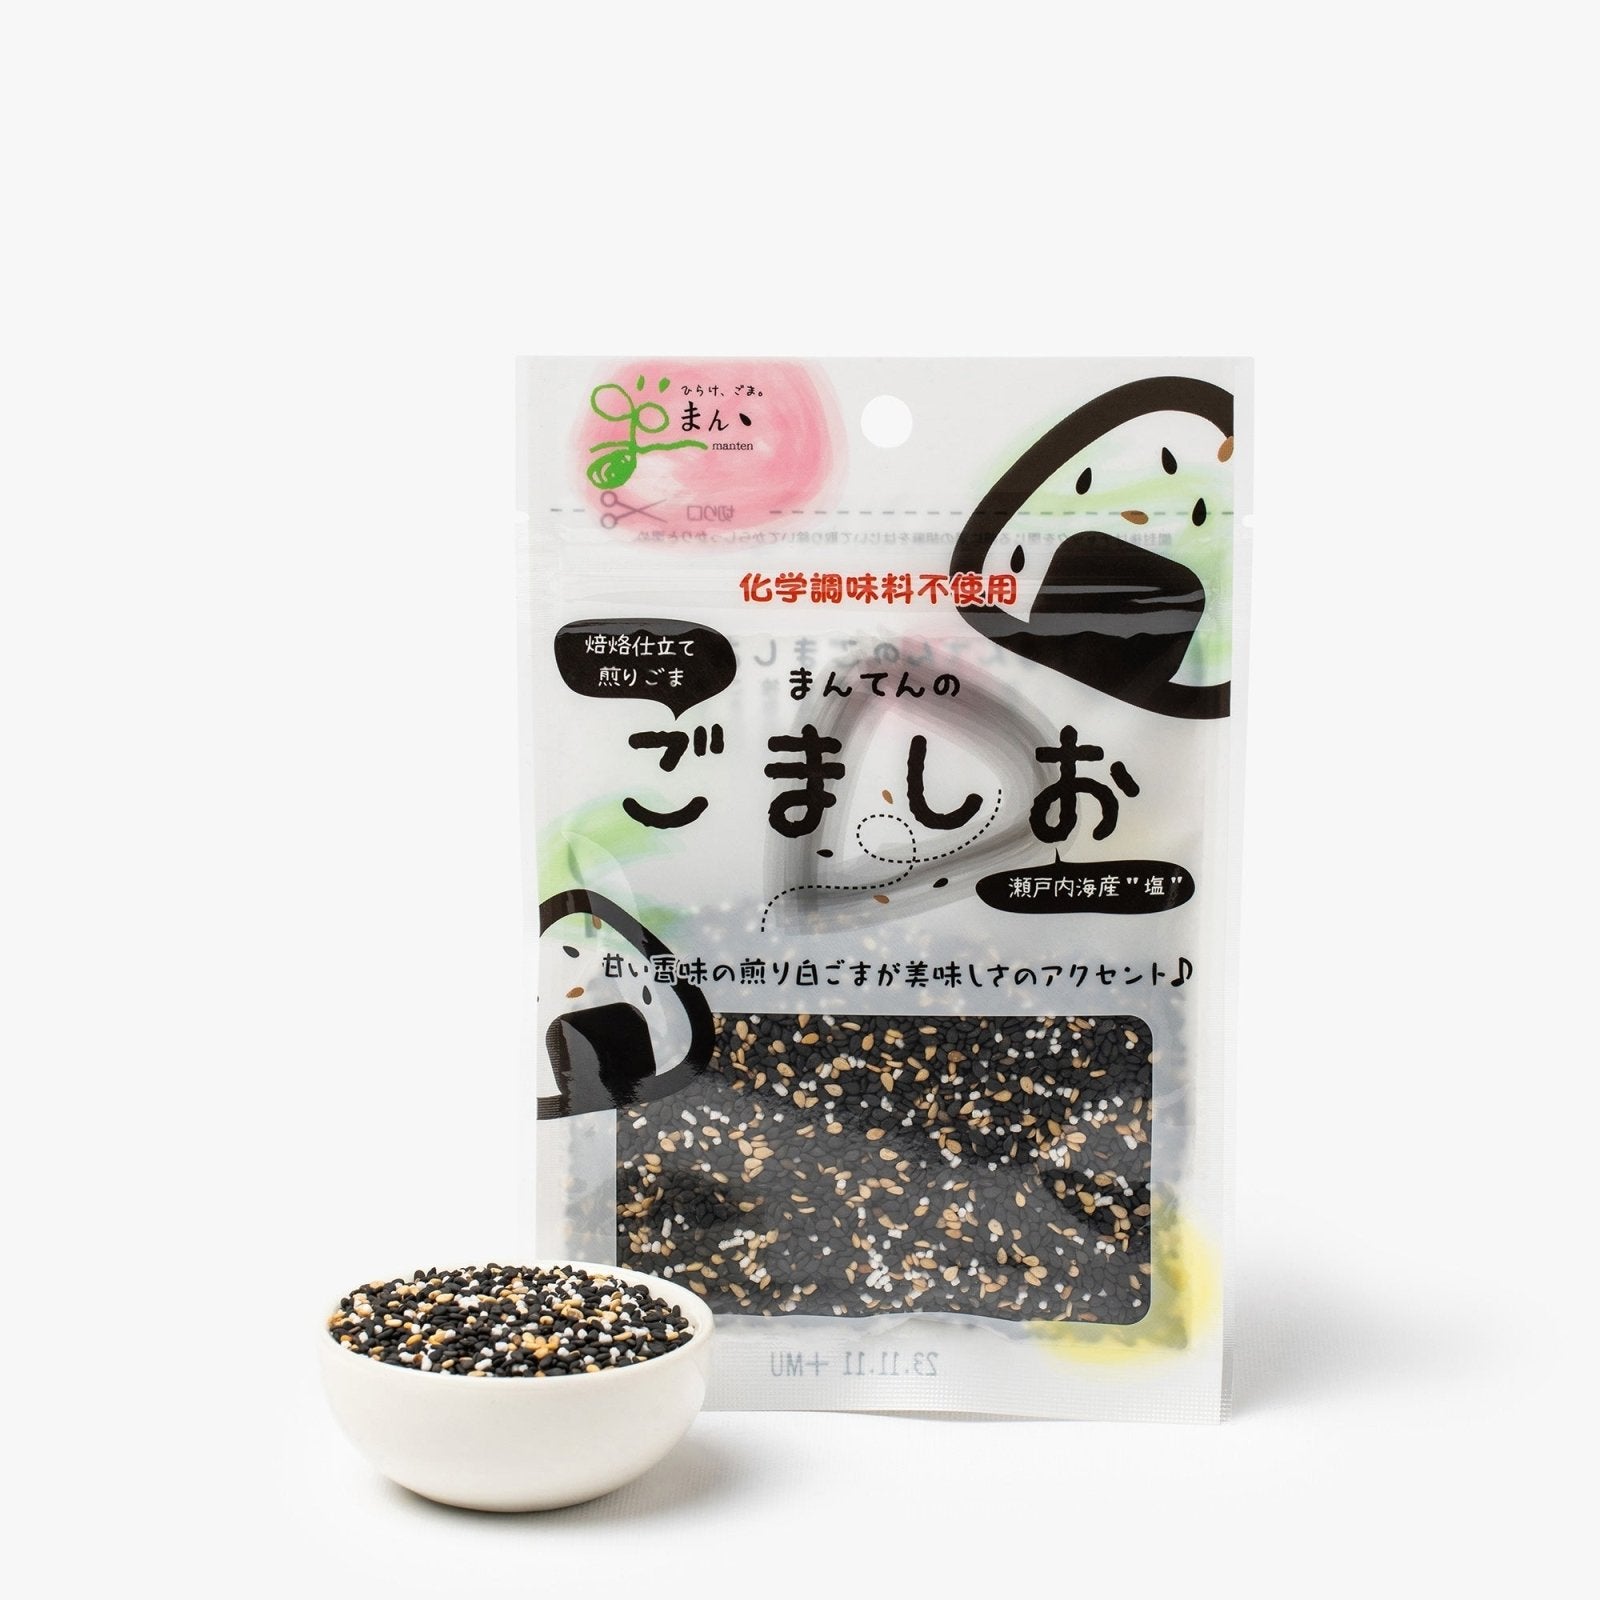 Roasted black and white sesame seeds with salt - 30g - iRASSHAi